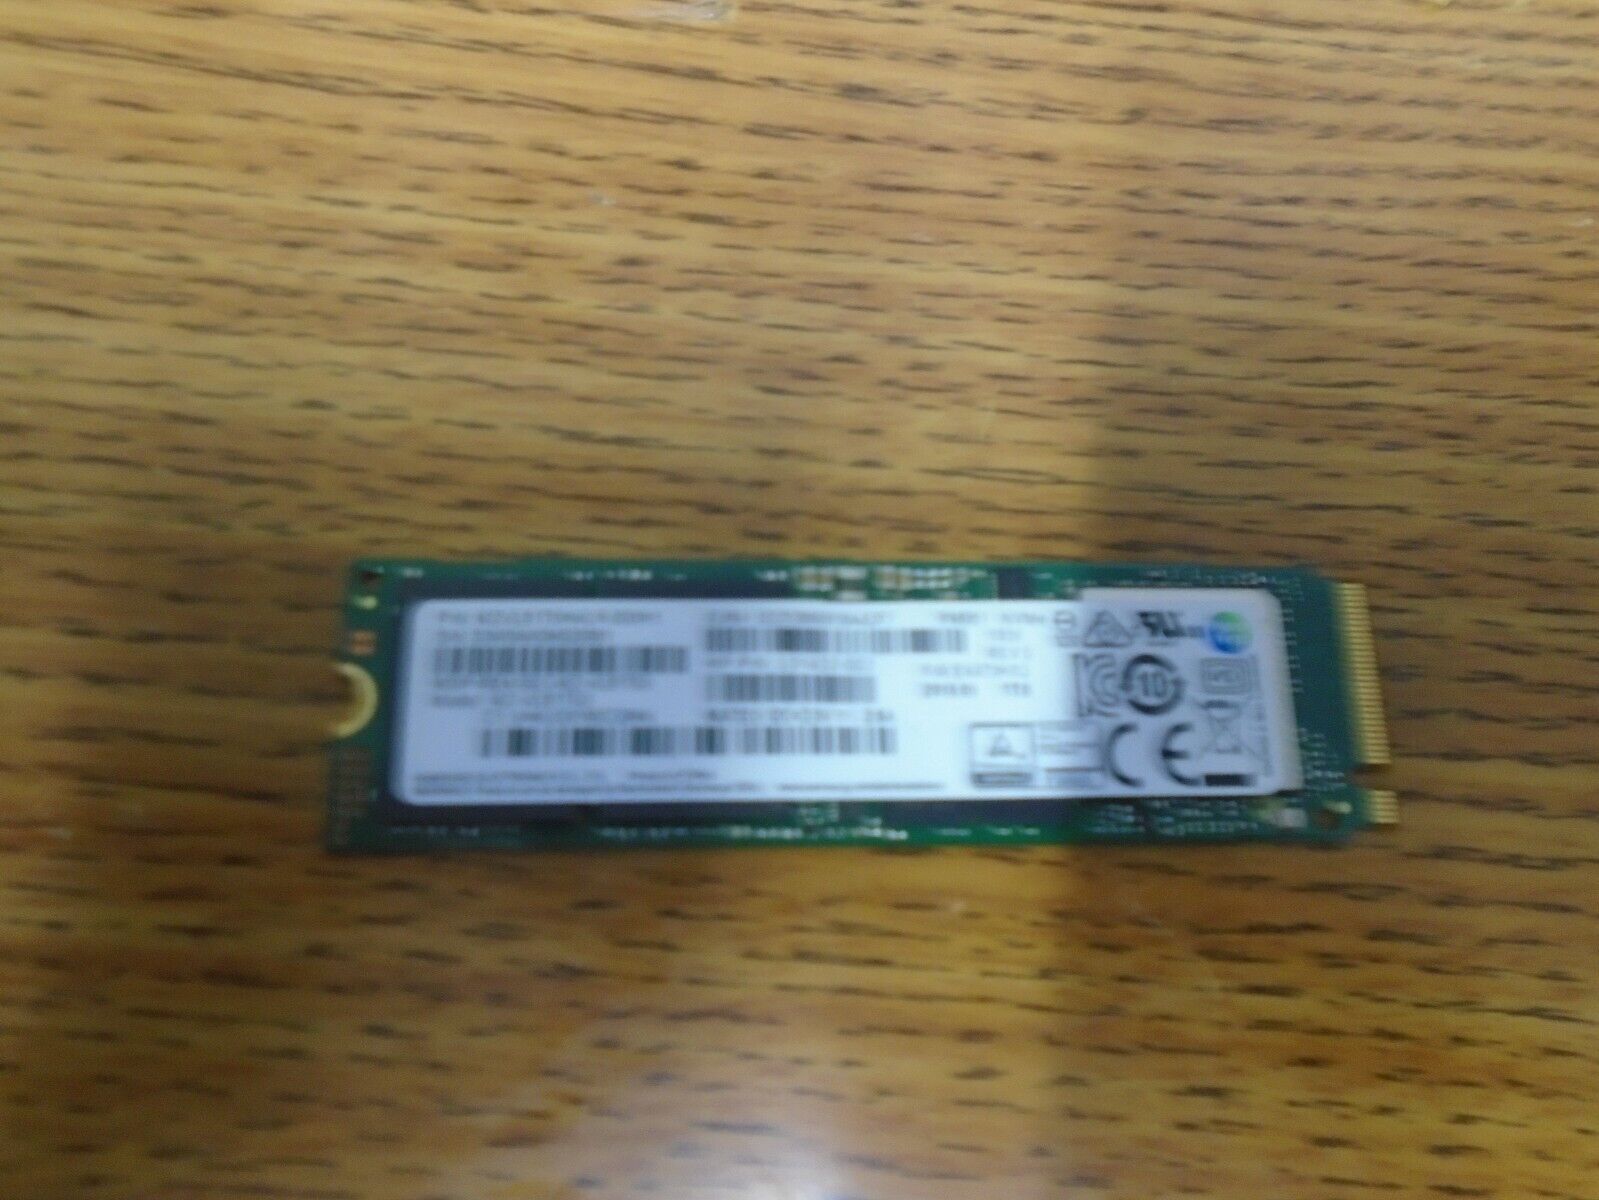 SAMSUNG MZ-VLB1T00 1TB P/N L01432-002 PM981 NVMe SSD Drive